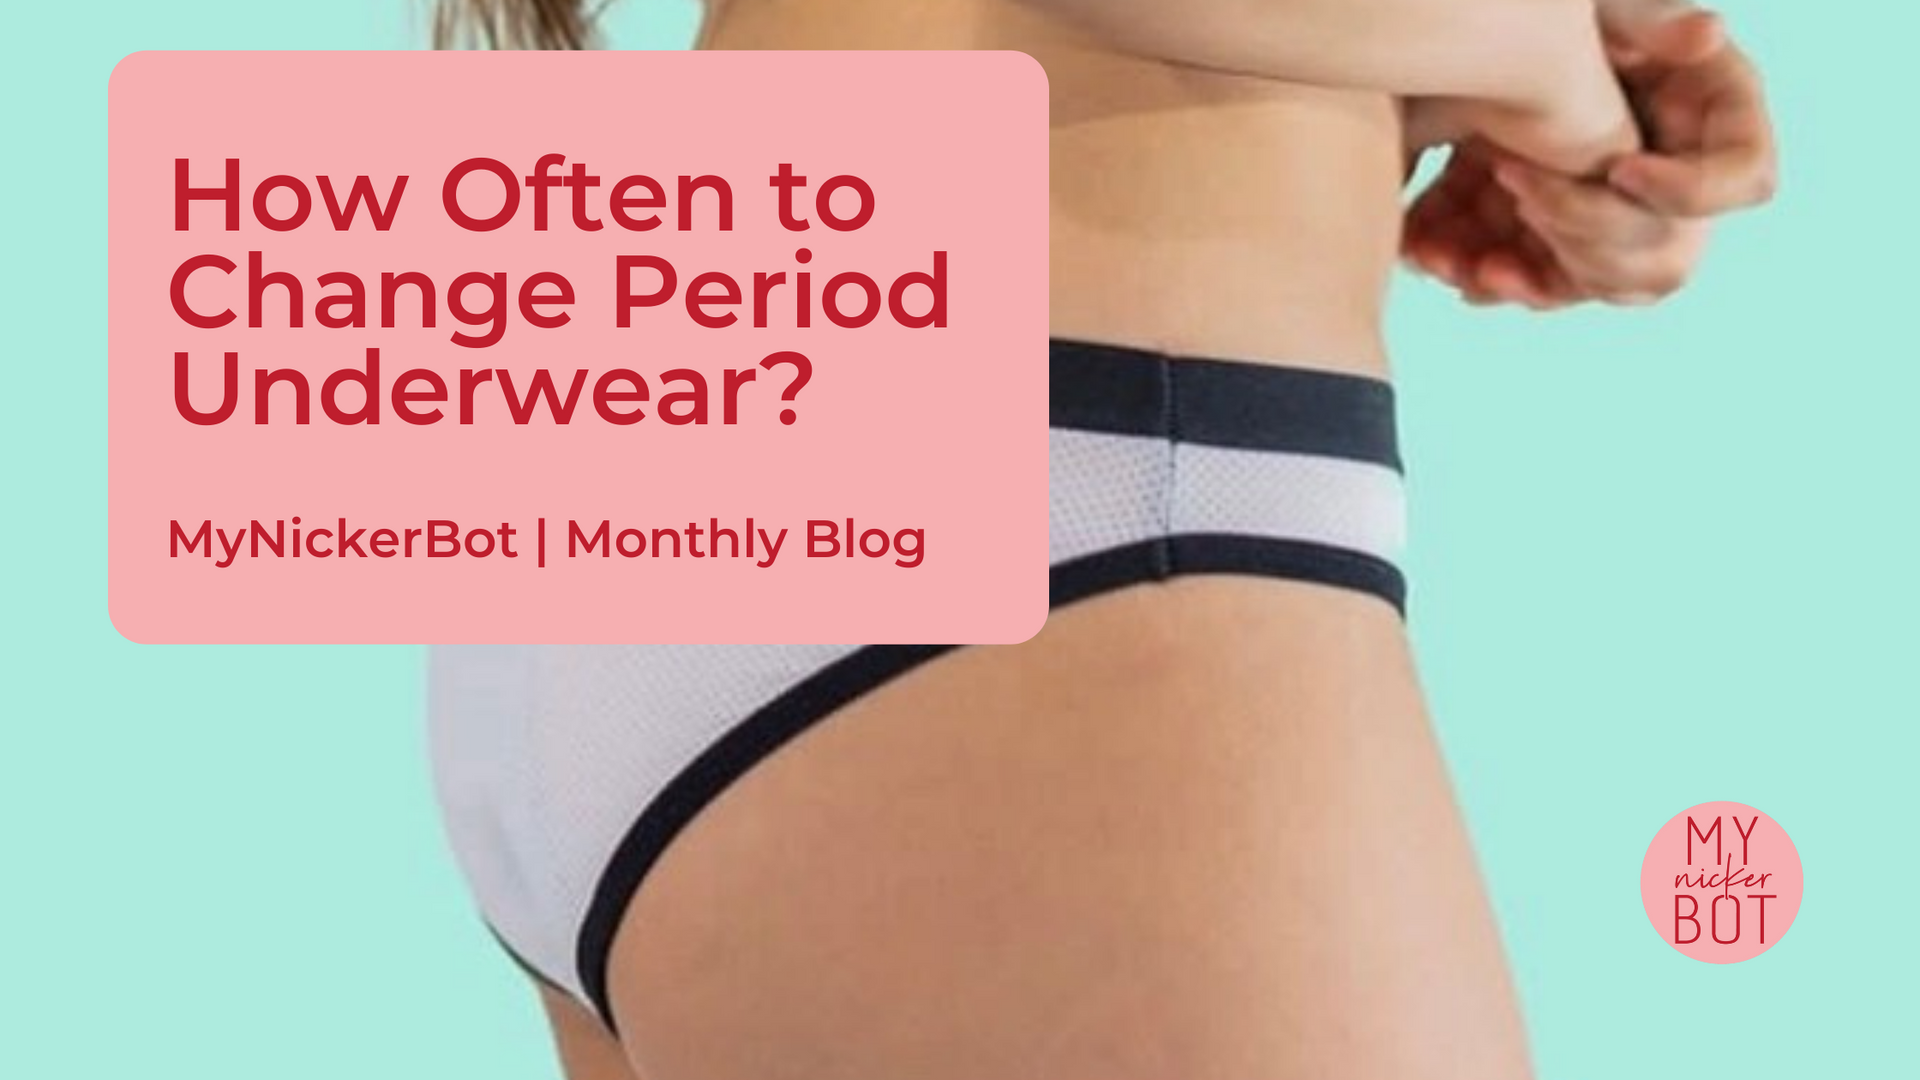 How do I know when to change period underwear?